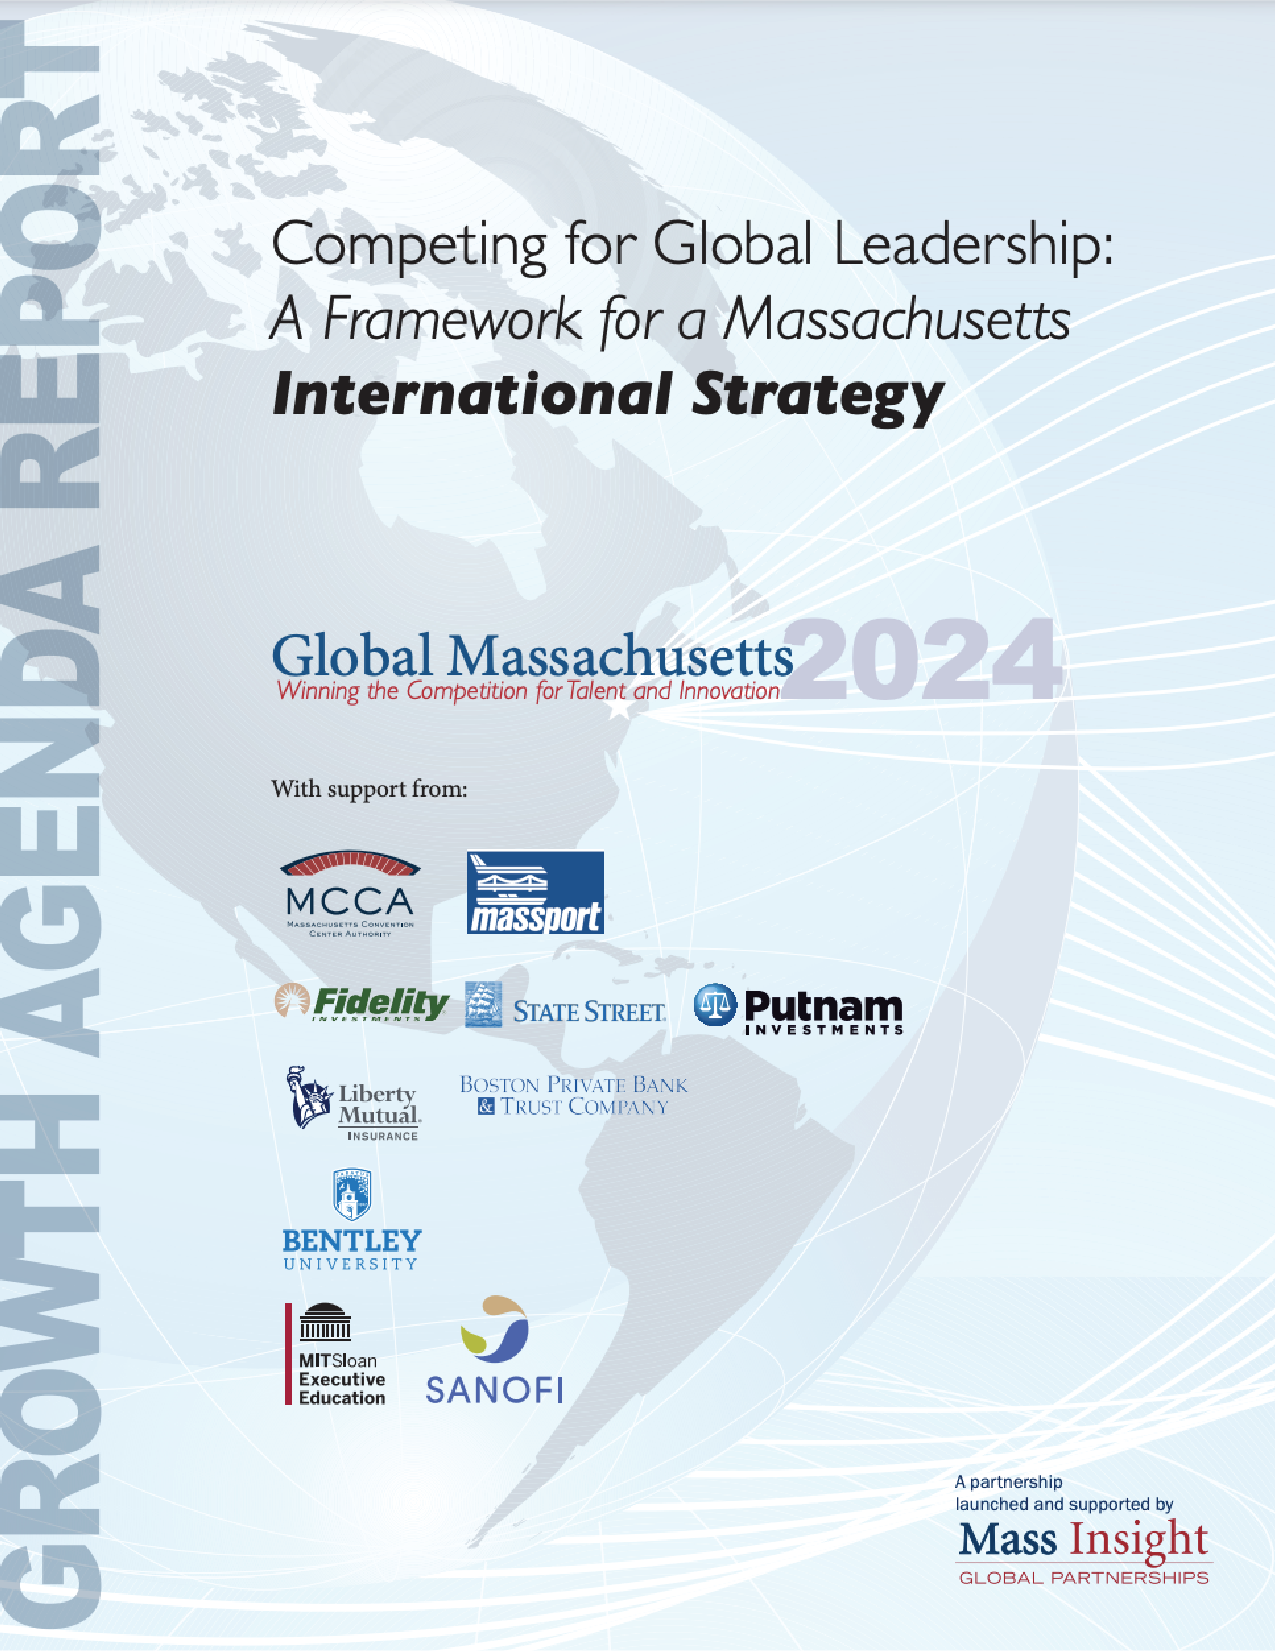 A Framework for Massachusetts: International Strategy (Executive Summary)